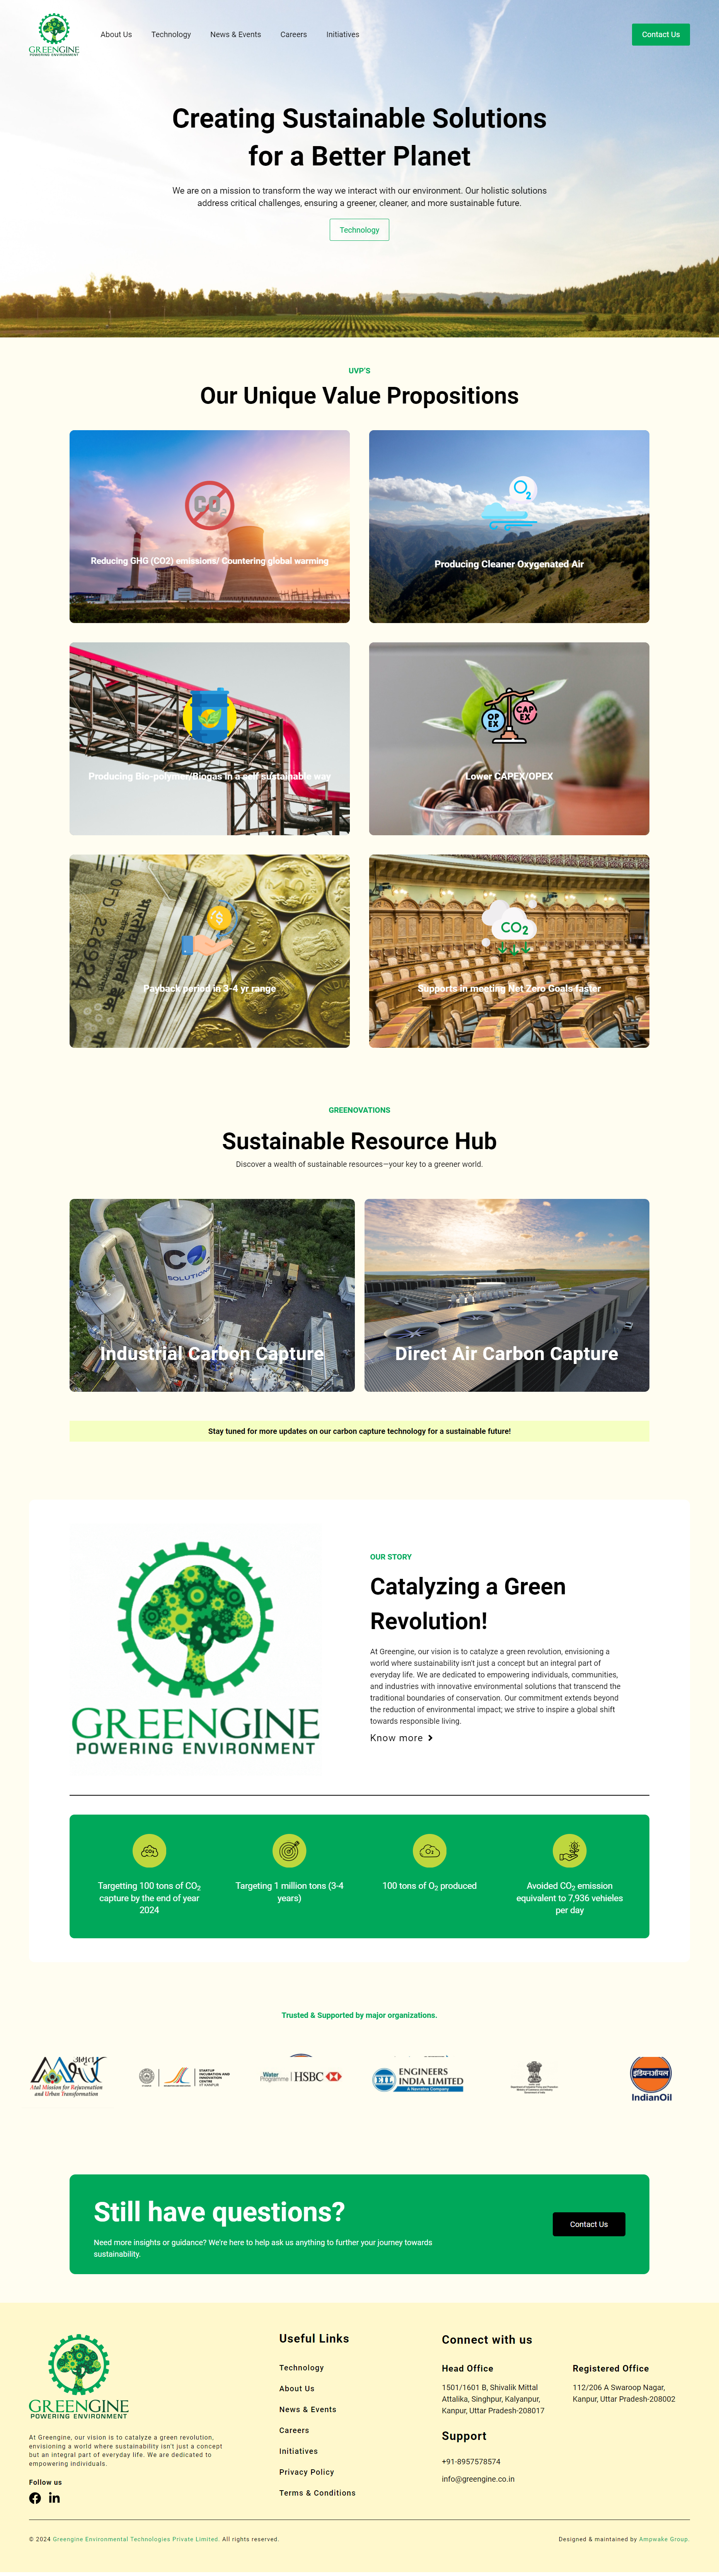 greengine environmental technologies pvt ltd